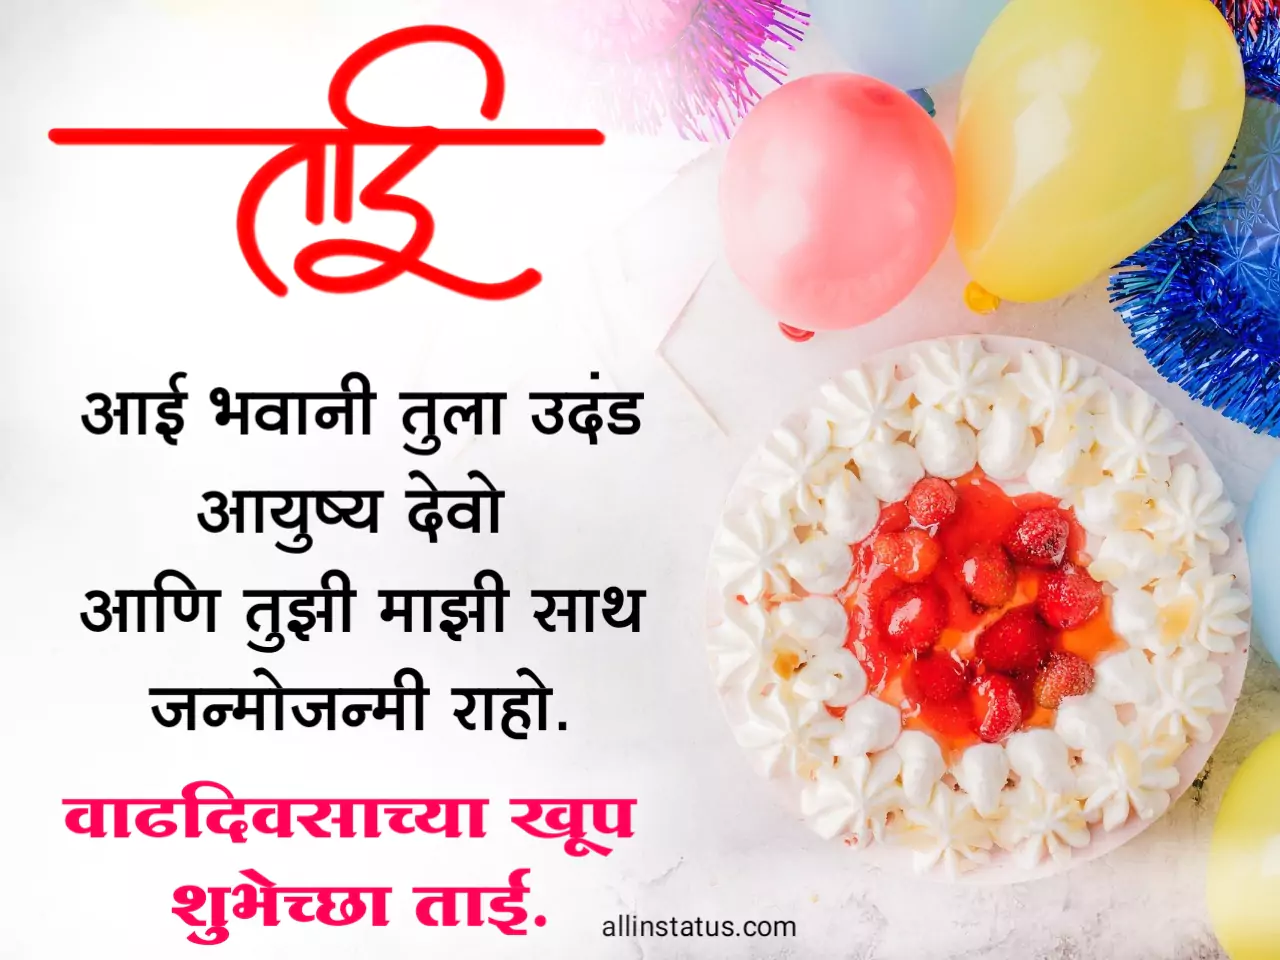 Happy Birthday Status for sister in marathi